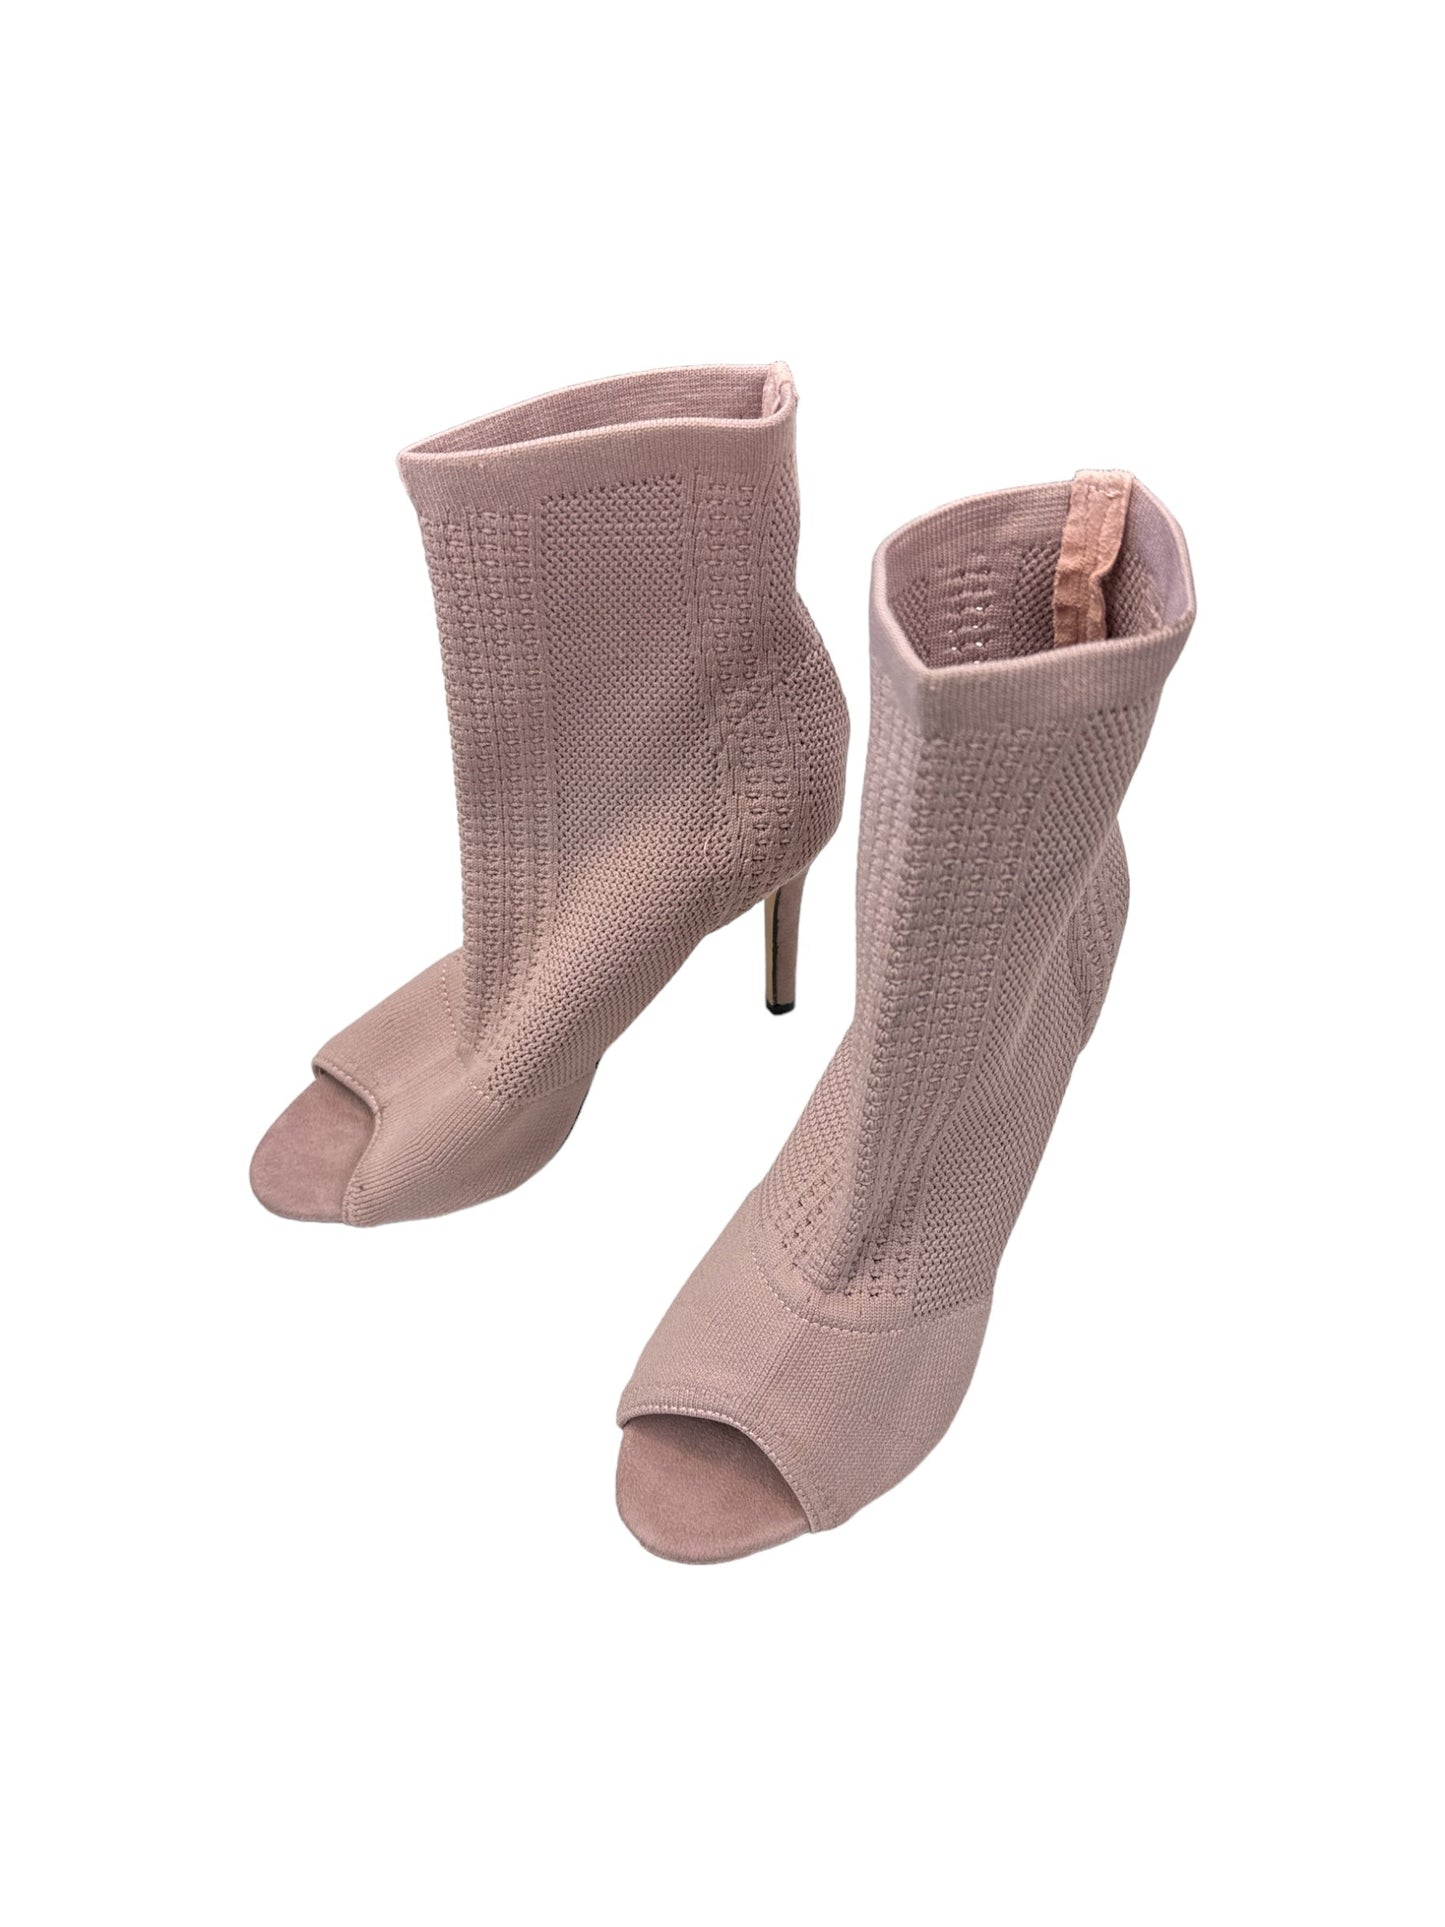 Pink Shoes Heels Stiletto Catherine Malandrino, Size 7.5